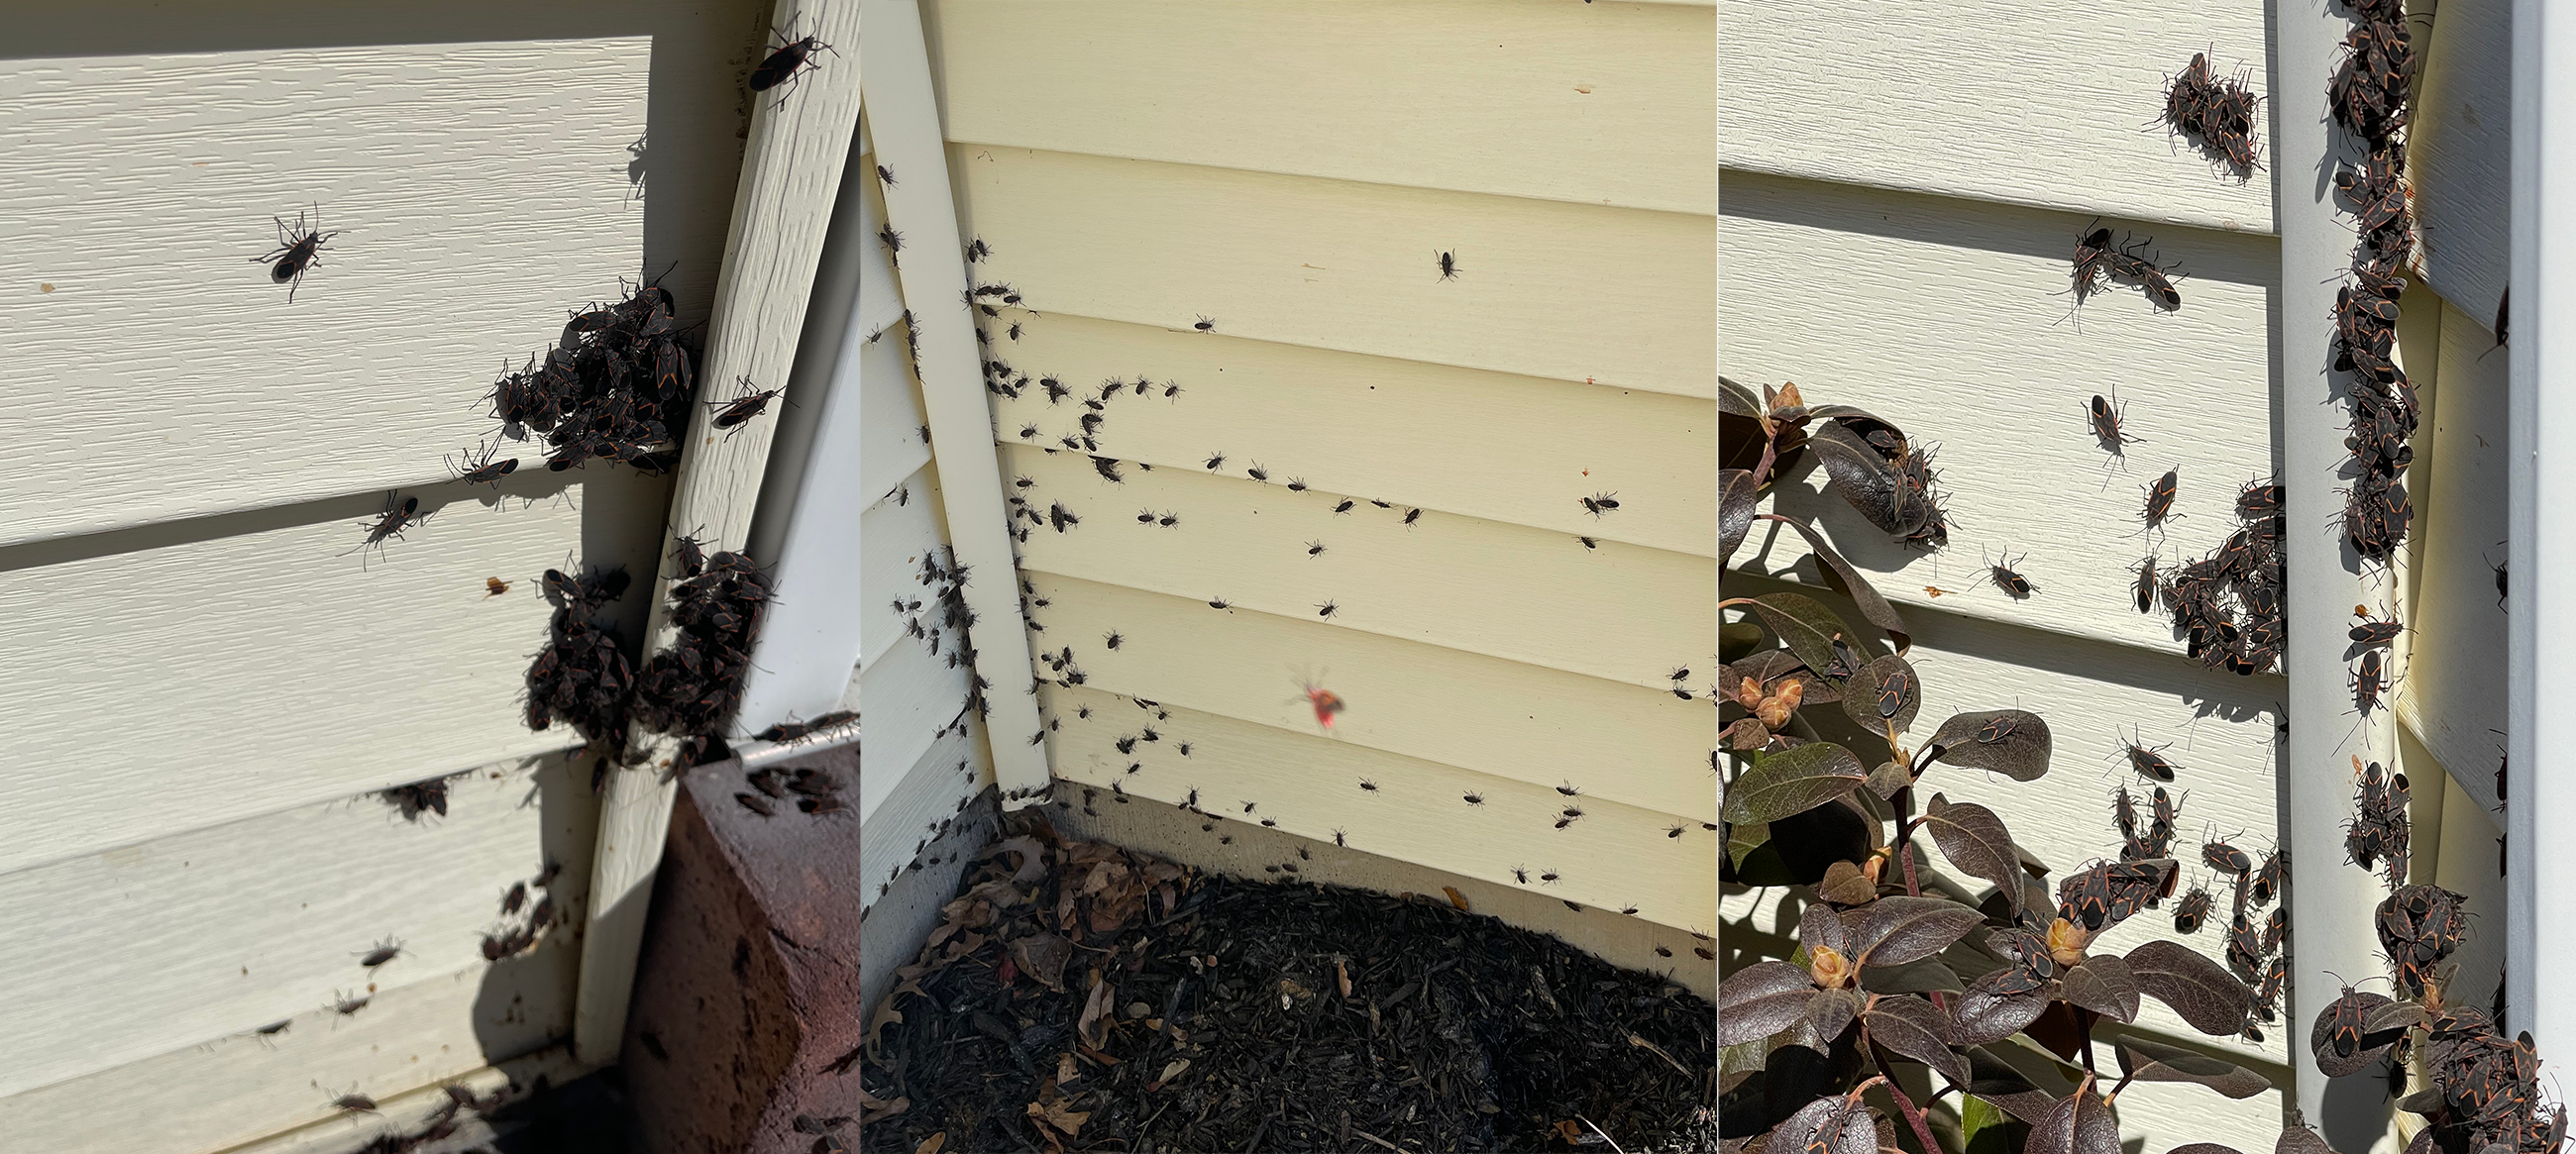 The Spring Invasion of Boxelder Bugs